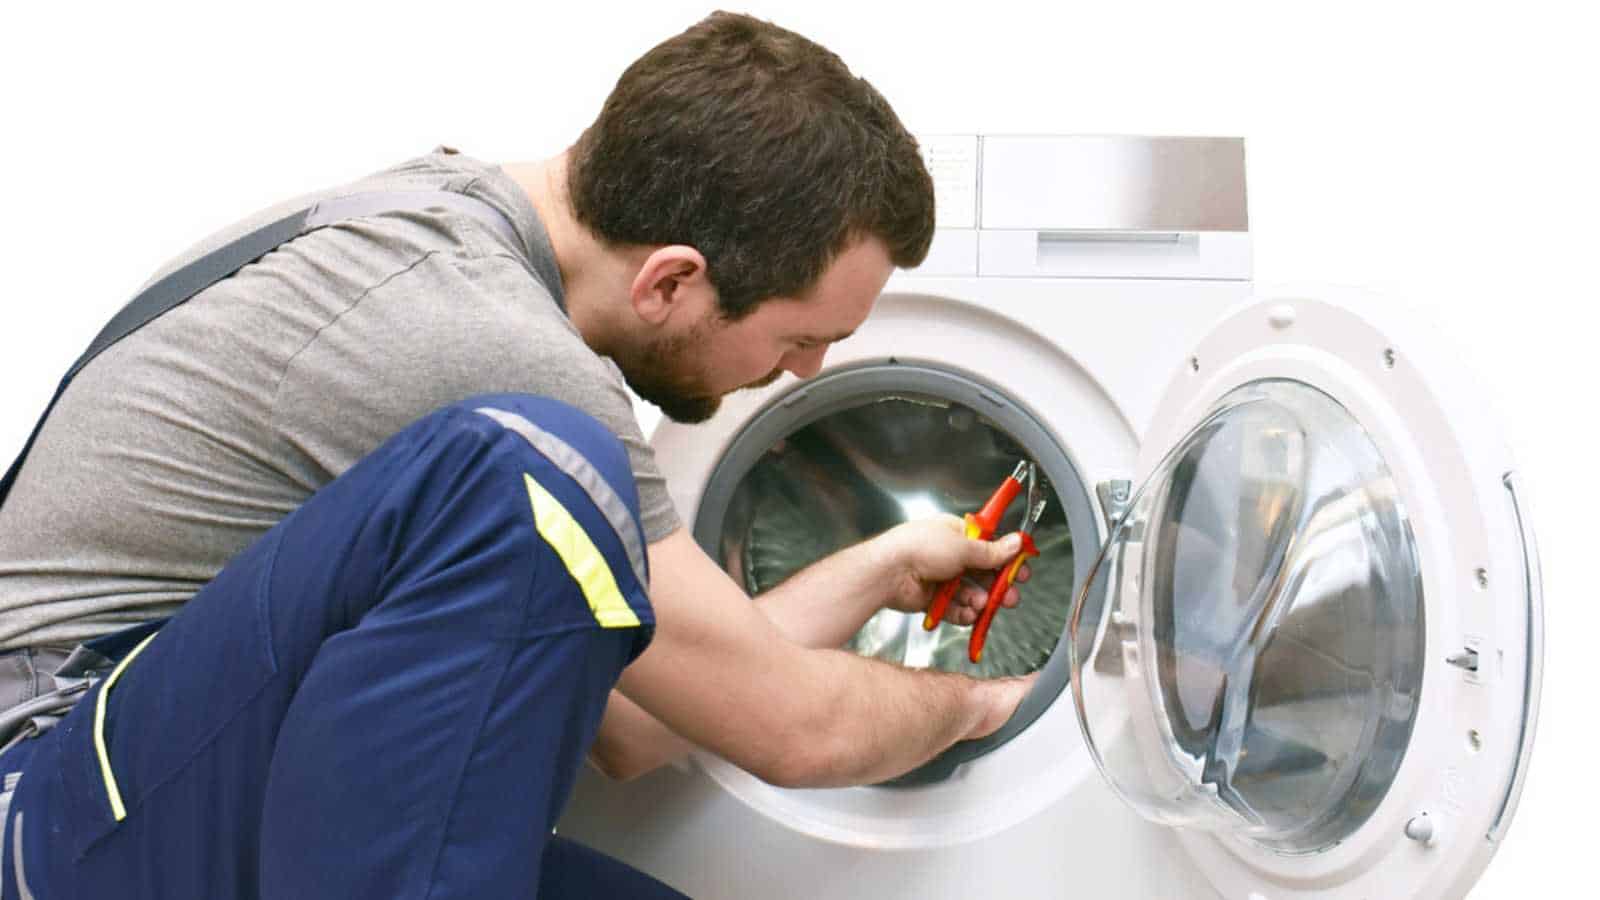 Man repairing washing machine